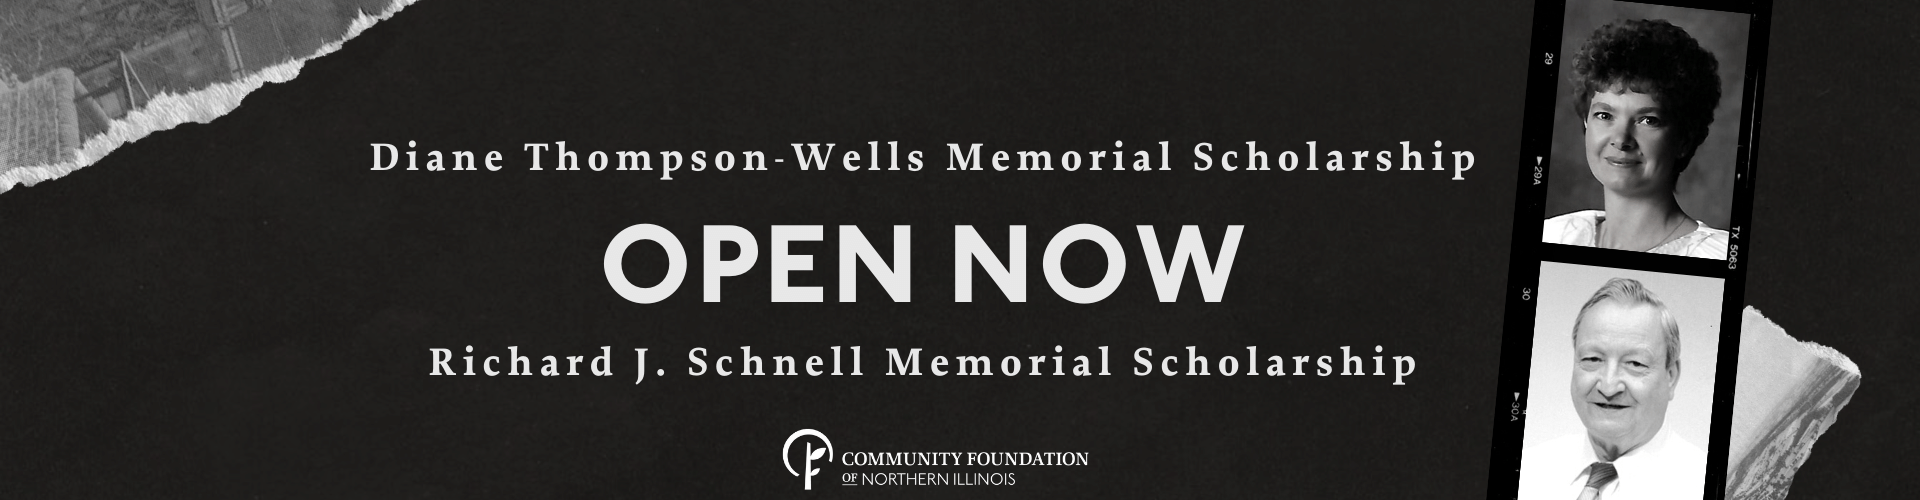 Diane Thompson-Wells Memorial Scholarship and Richard J. Schnell Memorial Scholarship Open Now. Black and white pictures of Diane Thompson-Wells and Richard J. Schnell.